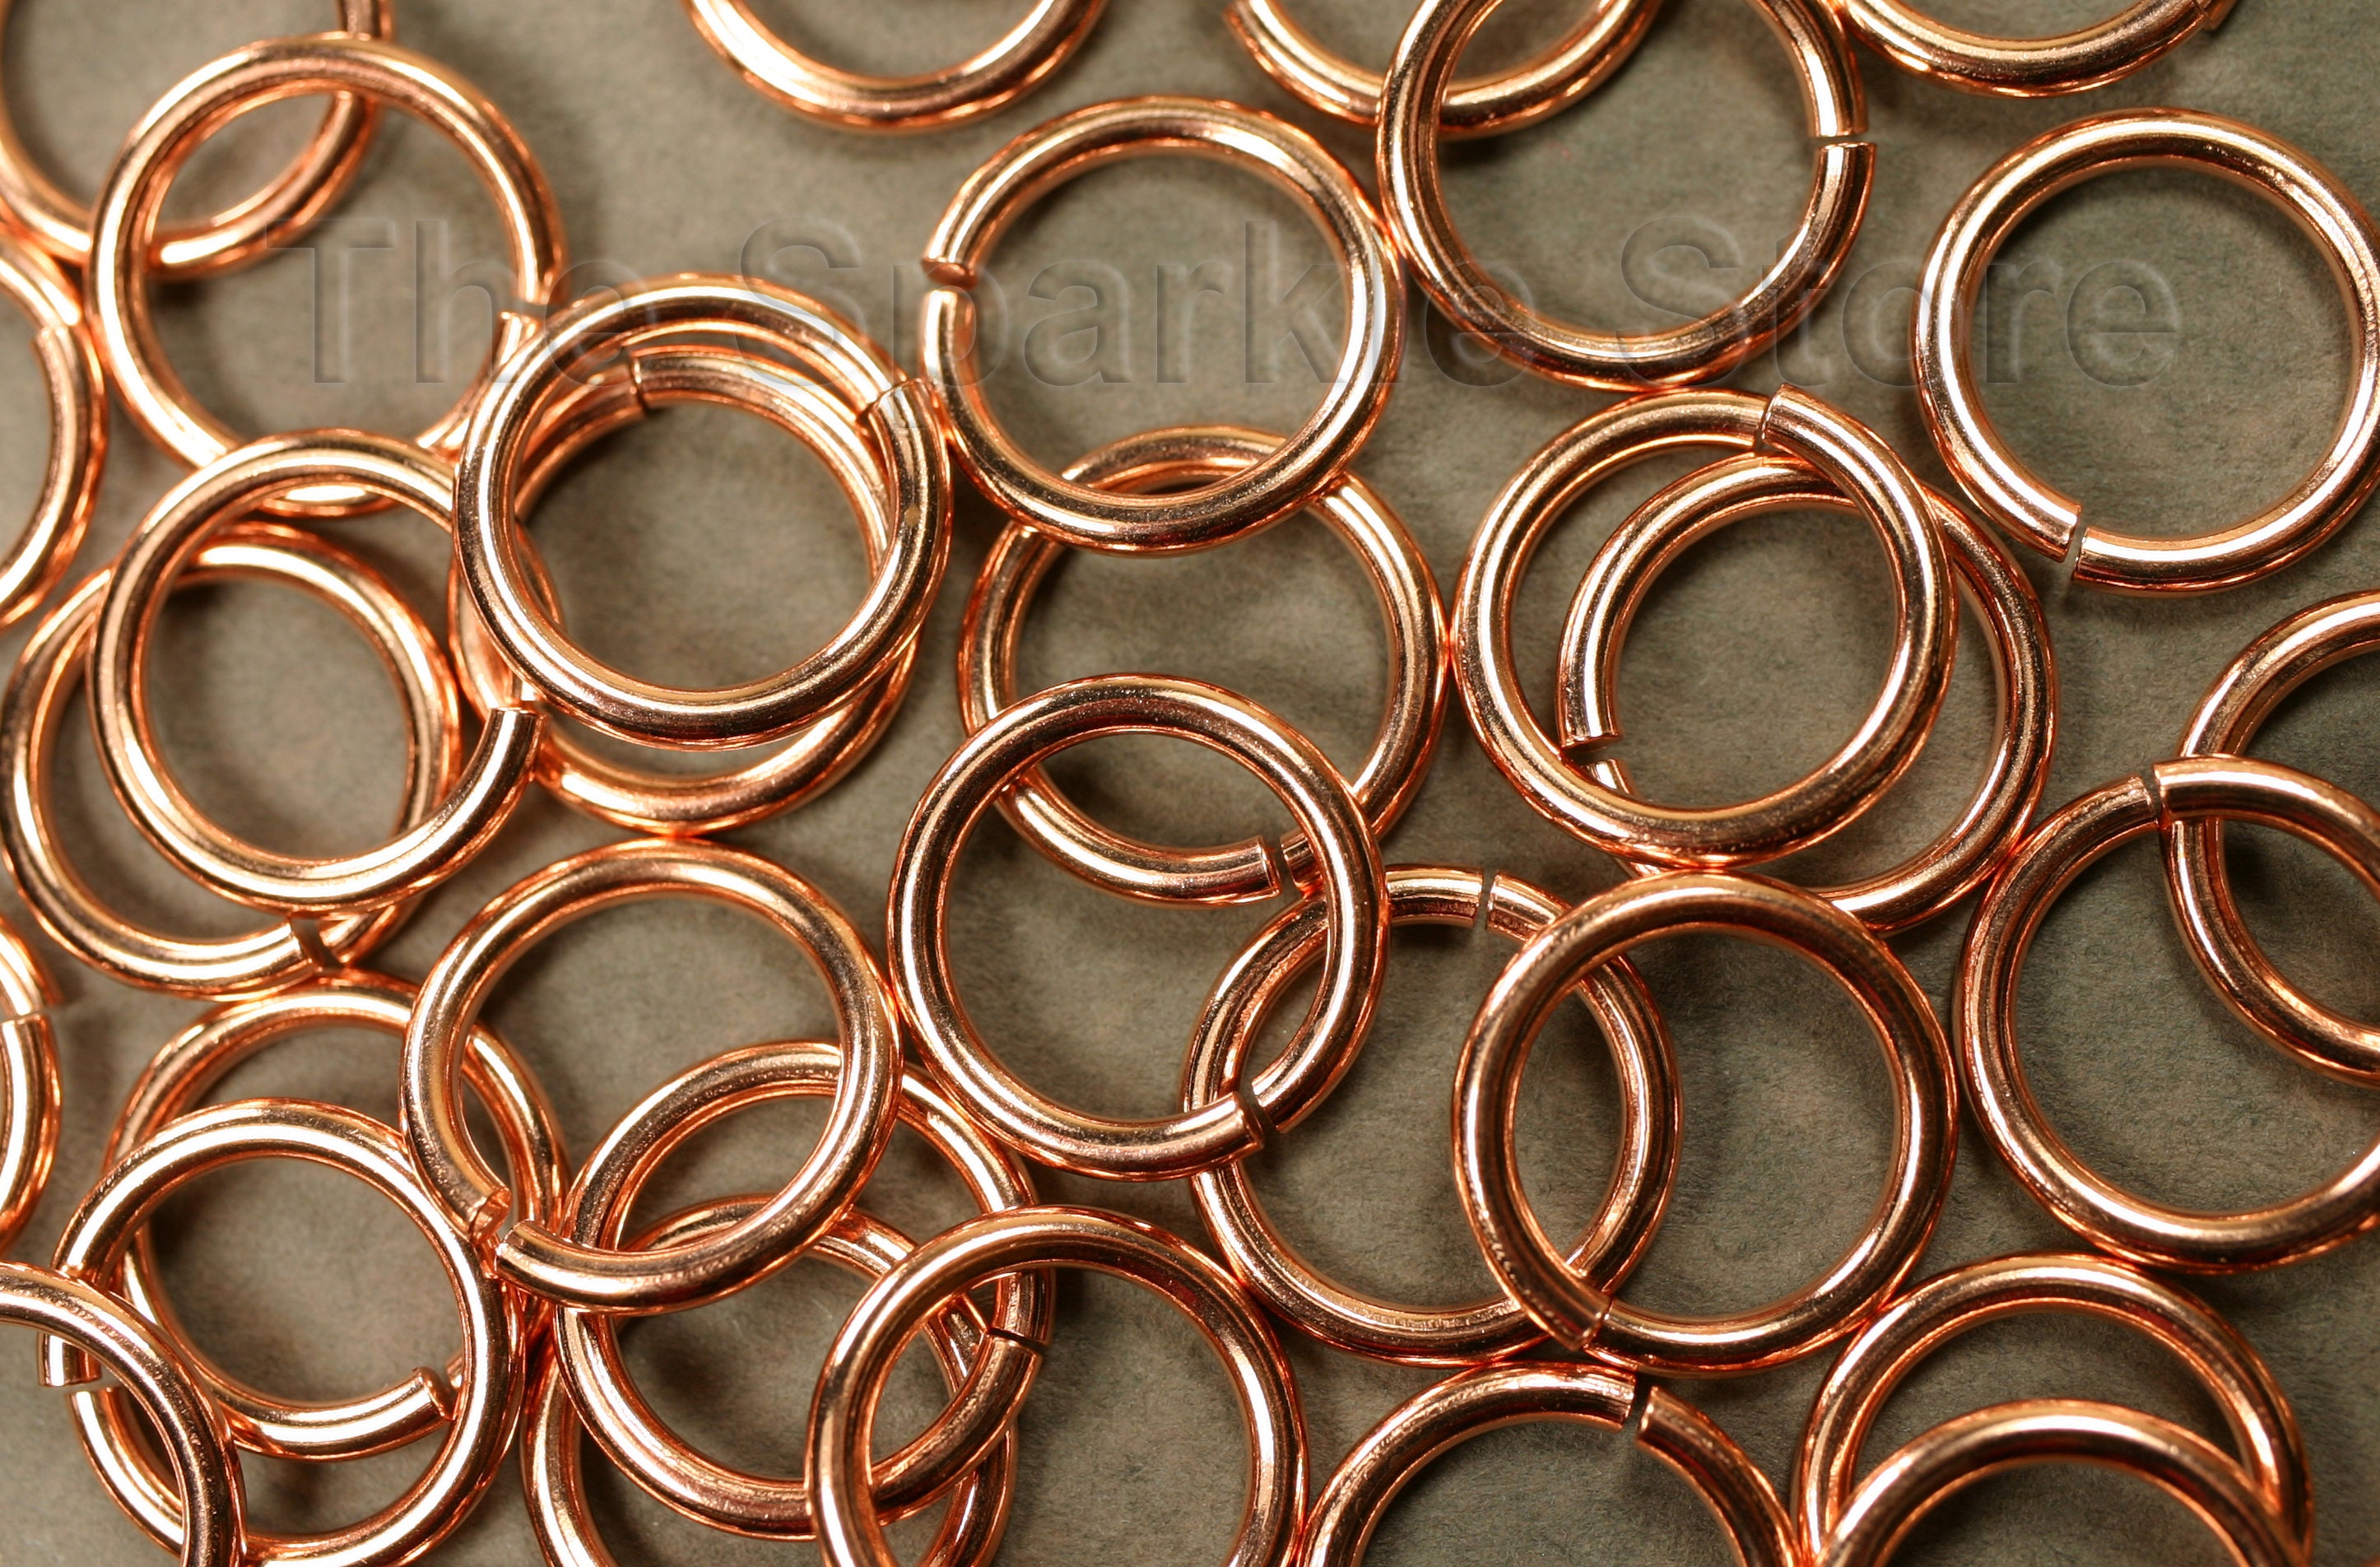 TEHAUX 5pcs Copper Jump Rings Opening Closing Rings Tools Jewelry Making  Rings Stackable Rings Open Jump Rings Jump Rings for Keychains Copper Rings